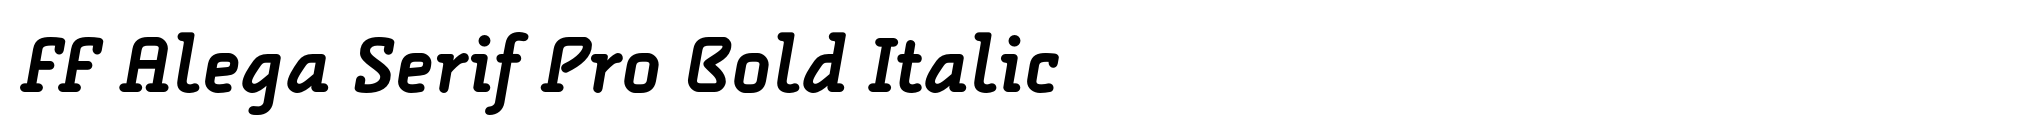 FF Alega Serif Pro Bold Italic image